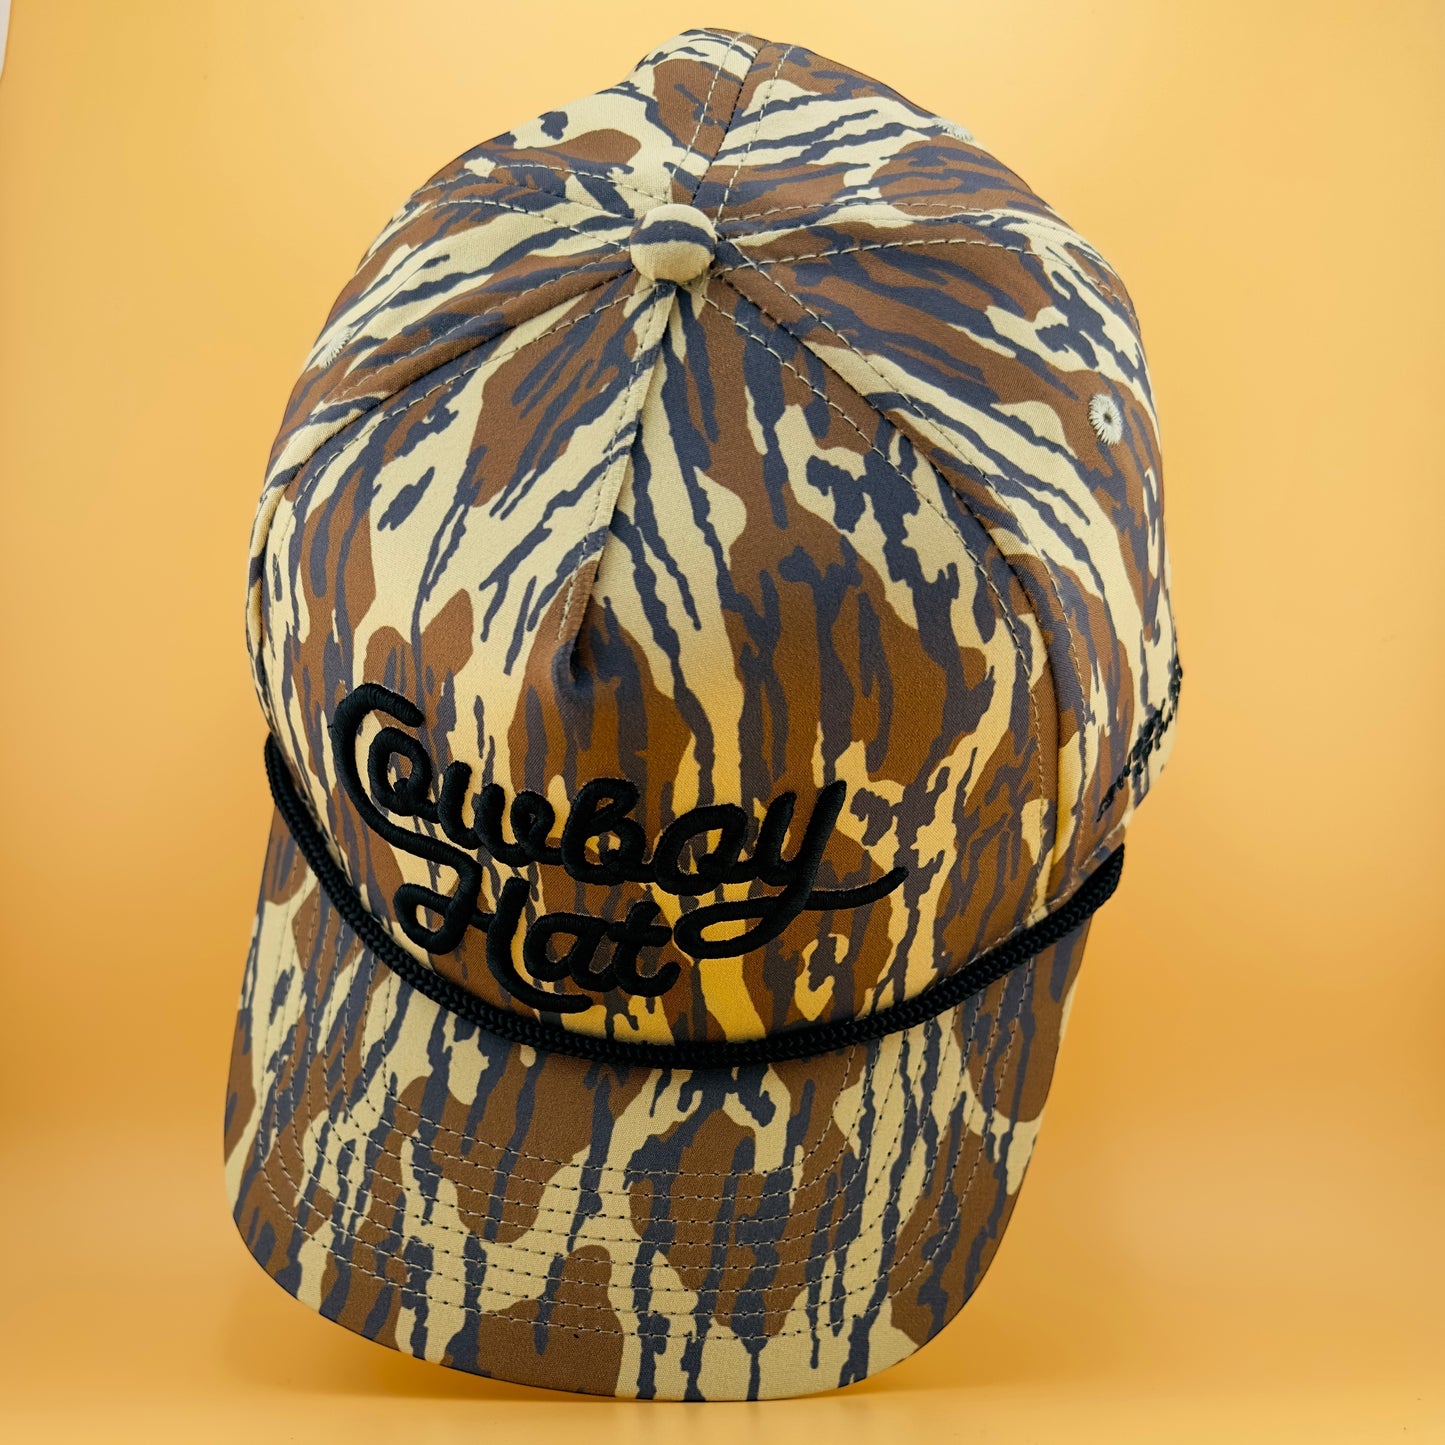 Old Camo “Cowboy Hat” - Cowboy Revolution 5-panel Performance Hat (QTY 12)